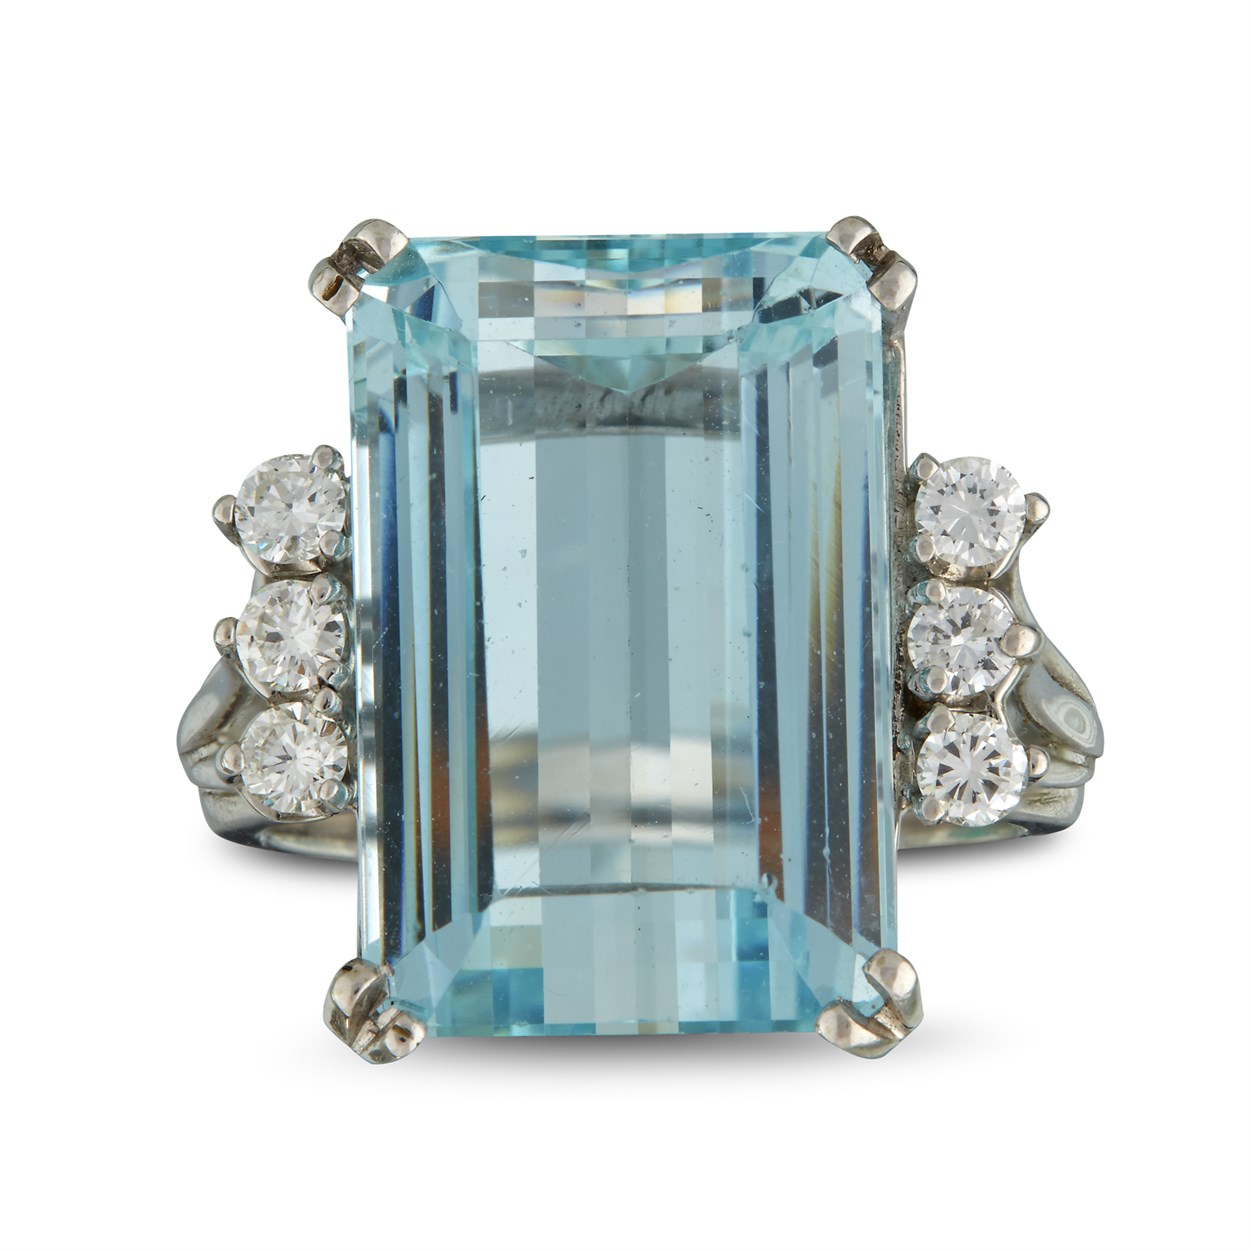 Lot 46 - An aquamarine, diamond, and fourteen karat white gold ring